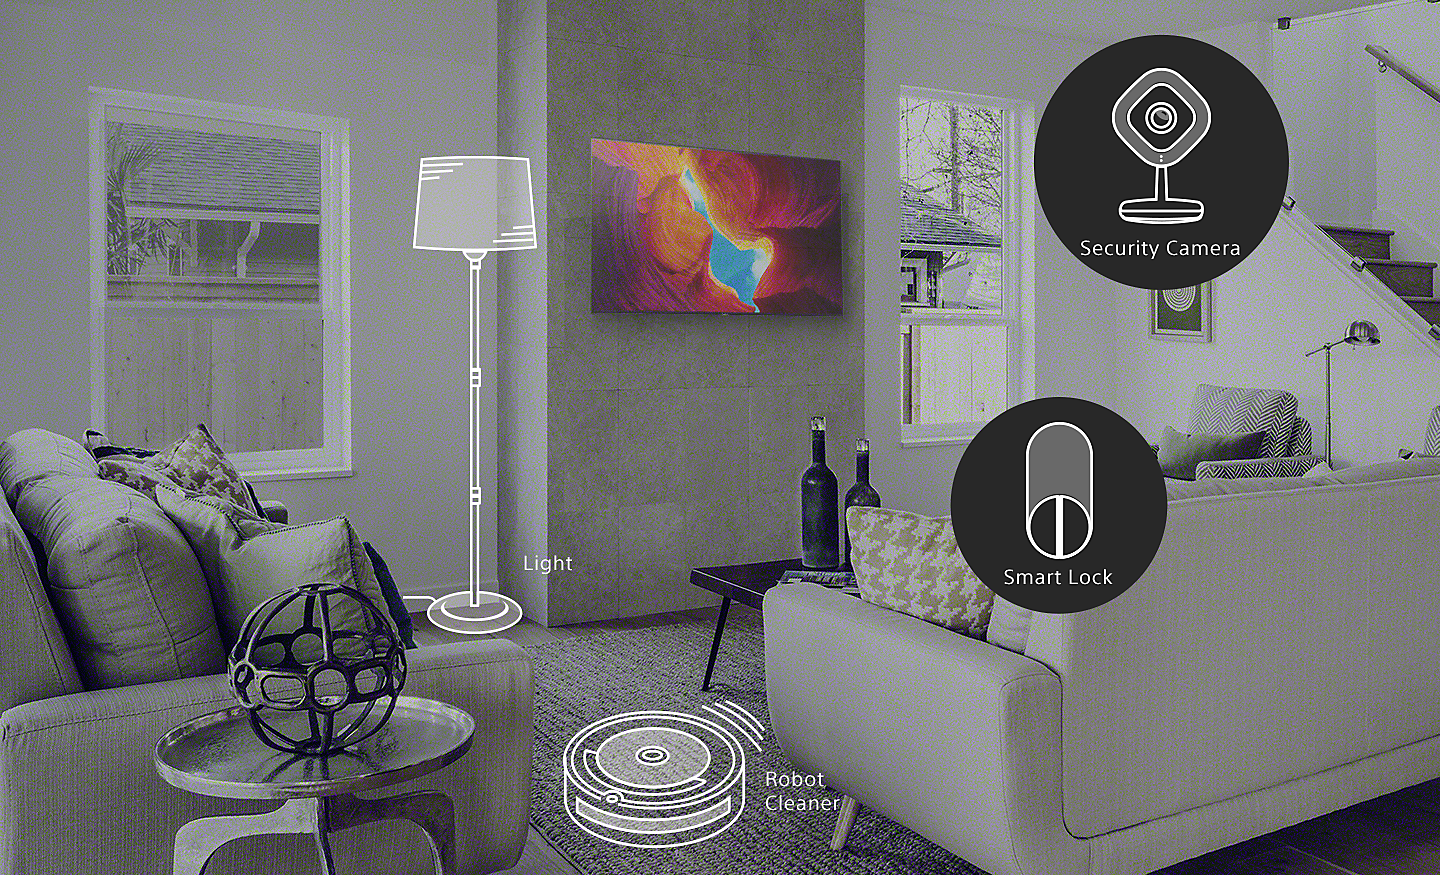 Ruang keluarga dengan perangkat rumah pintar, seperti lampu, robot pembersih, kamera keamanan, dan kunci pintar